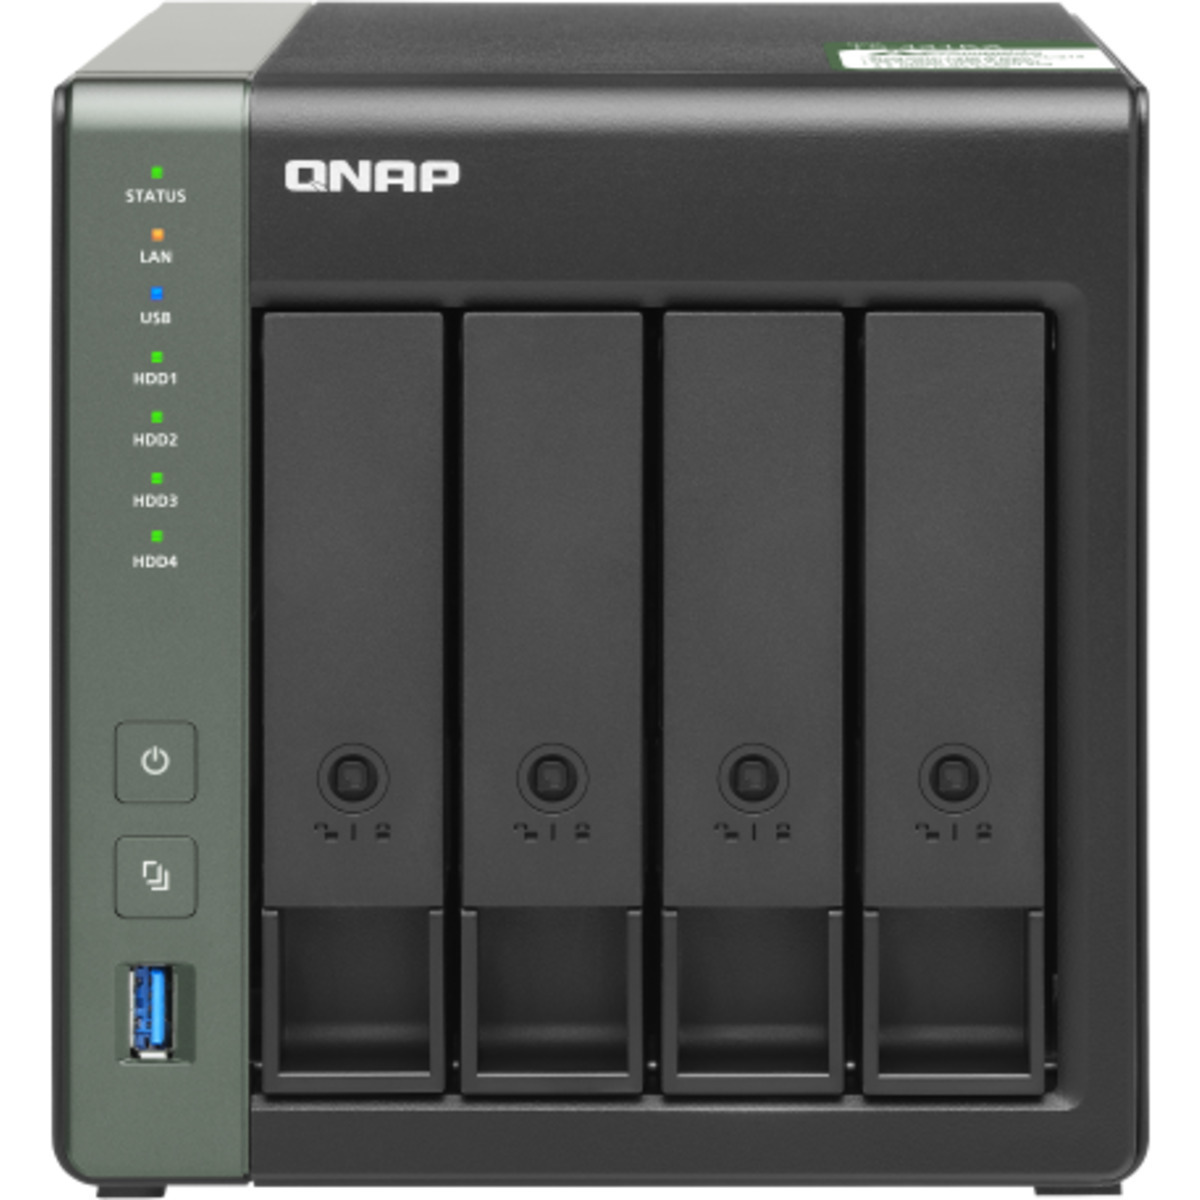 buy $694 QNAP TS-431KX DISKLESS Desktop NAS - Network Attached Storage Device TS-431KX